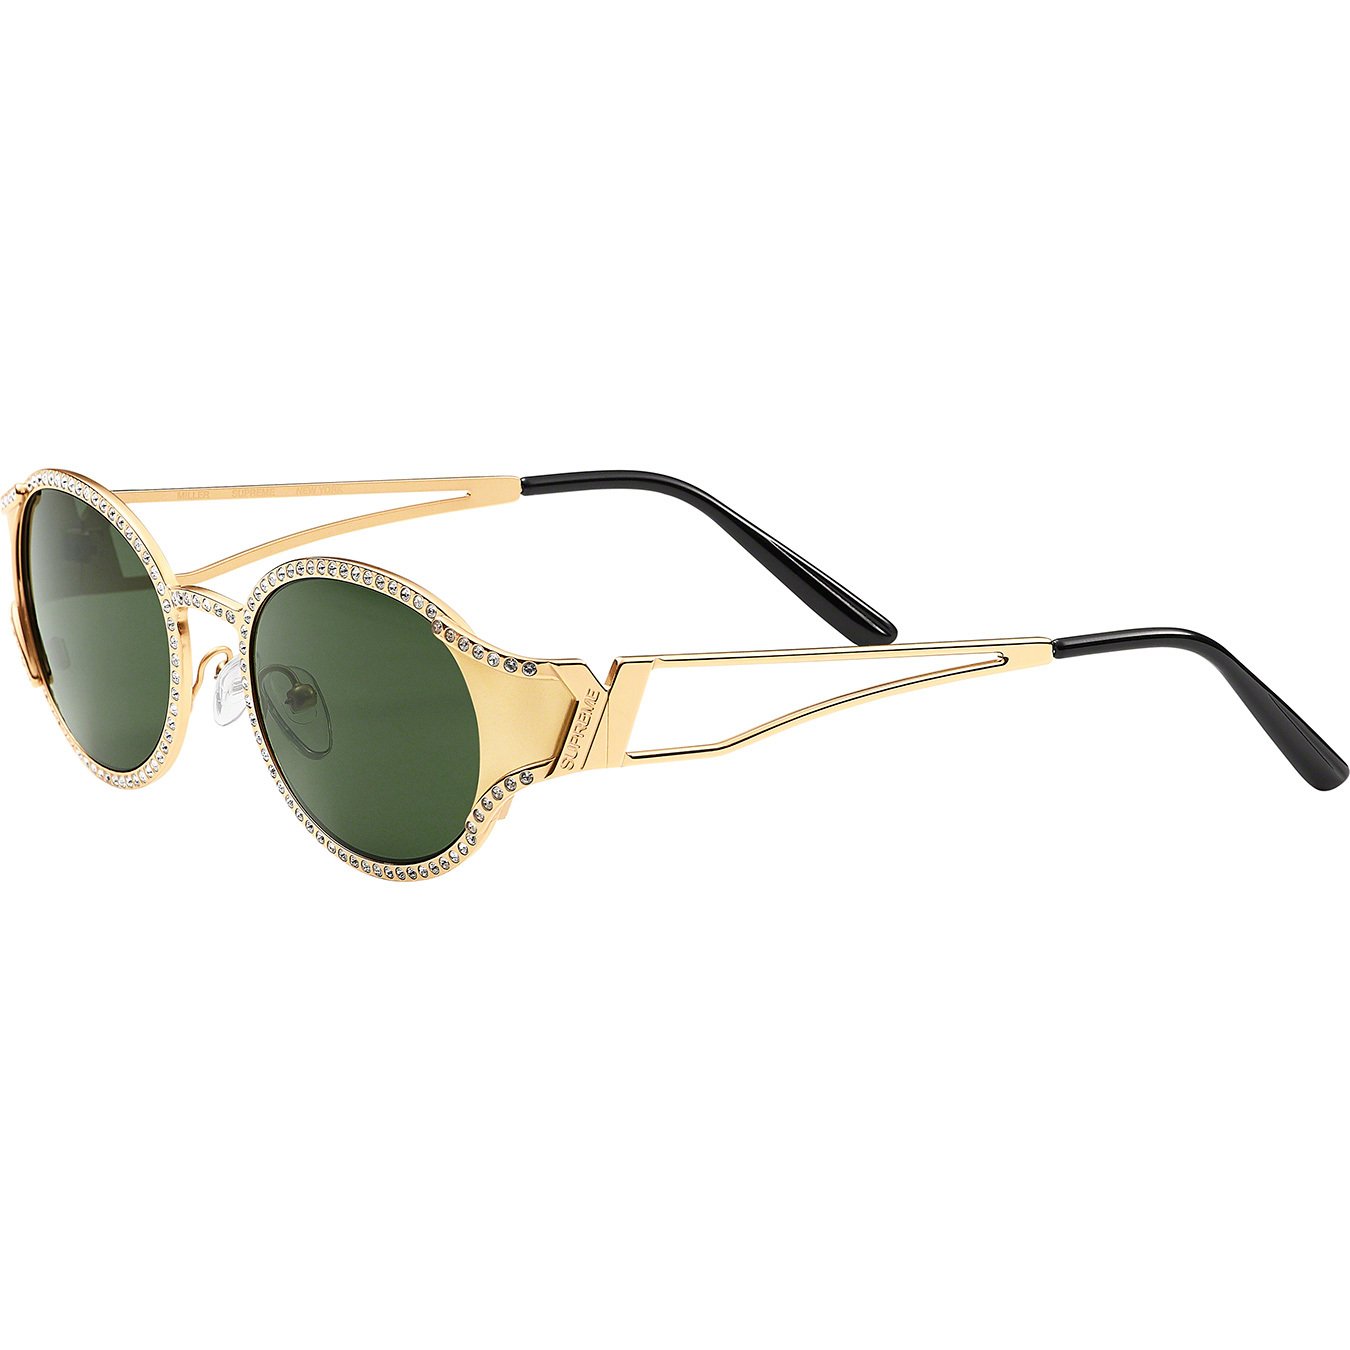 Cater ONWAAR Hesje Miller Sunglasses - spring summer 2020 - Supreme